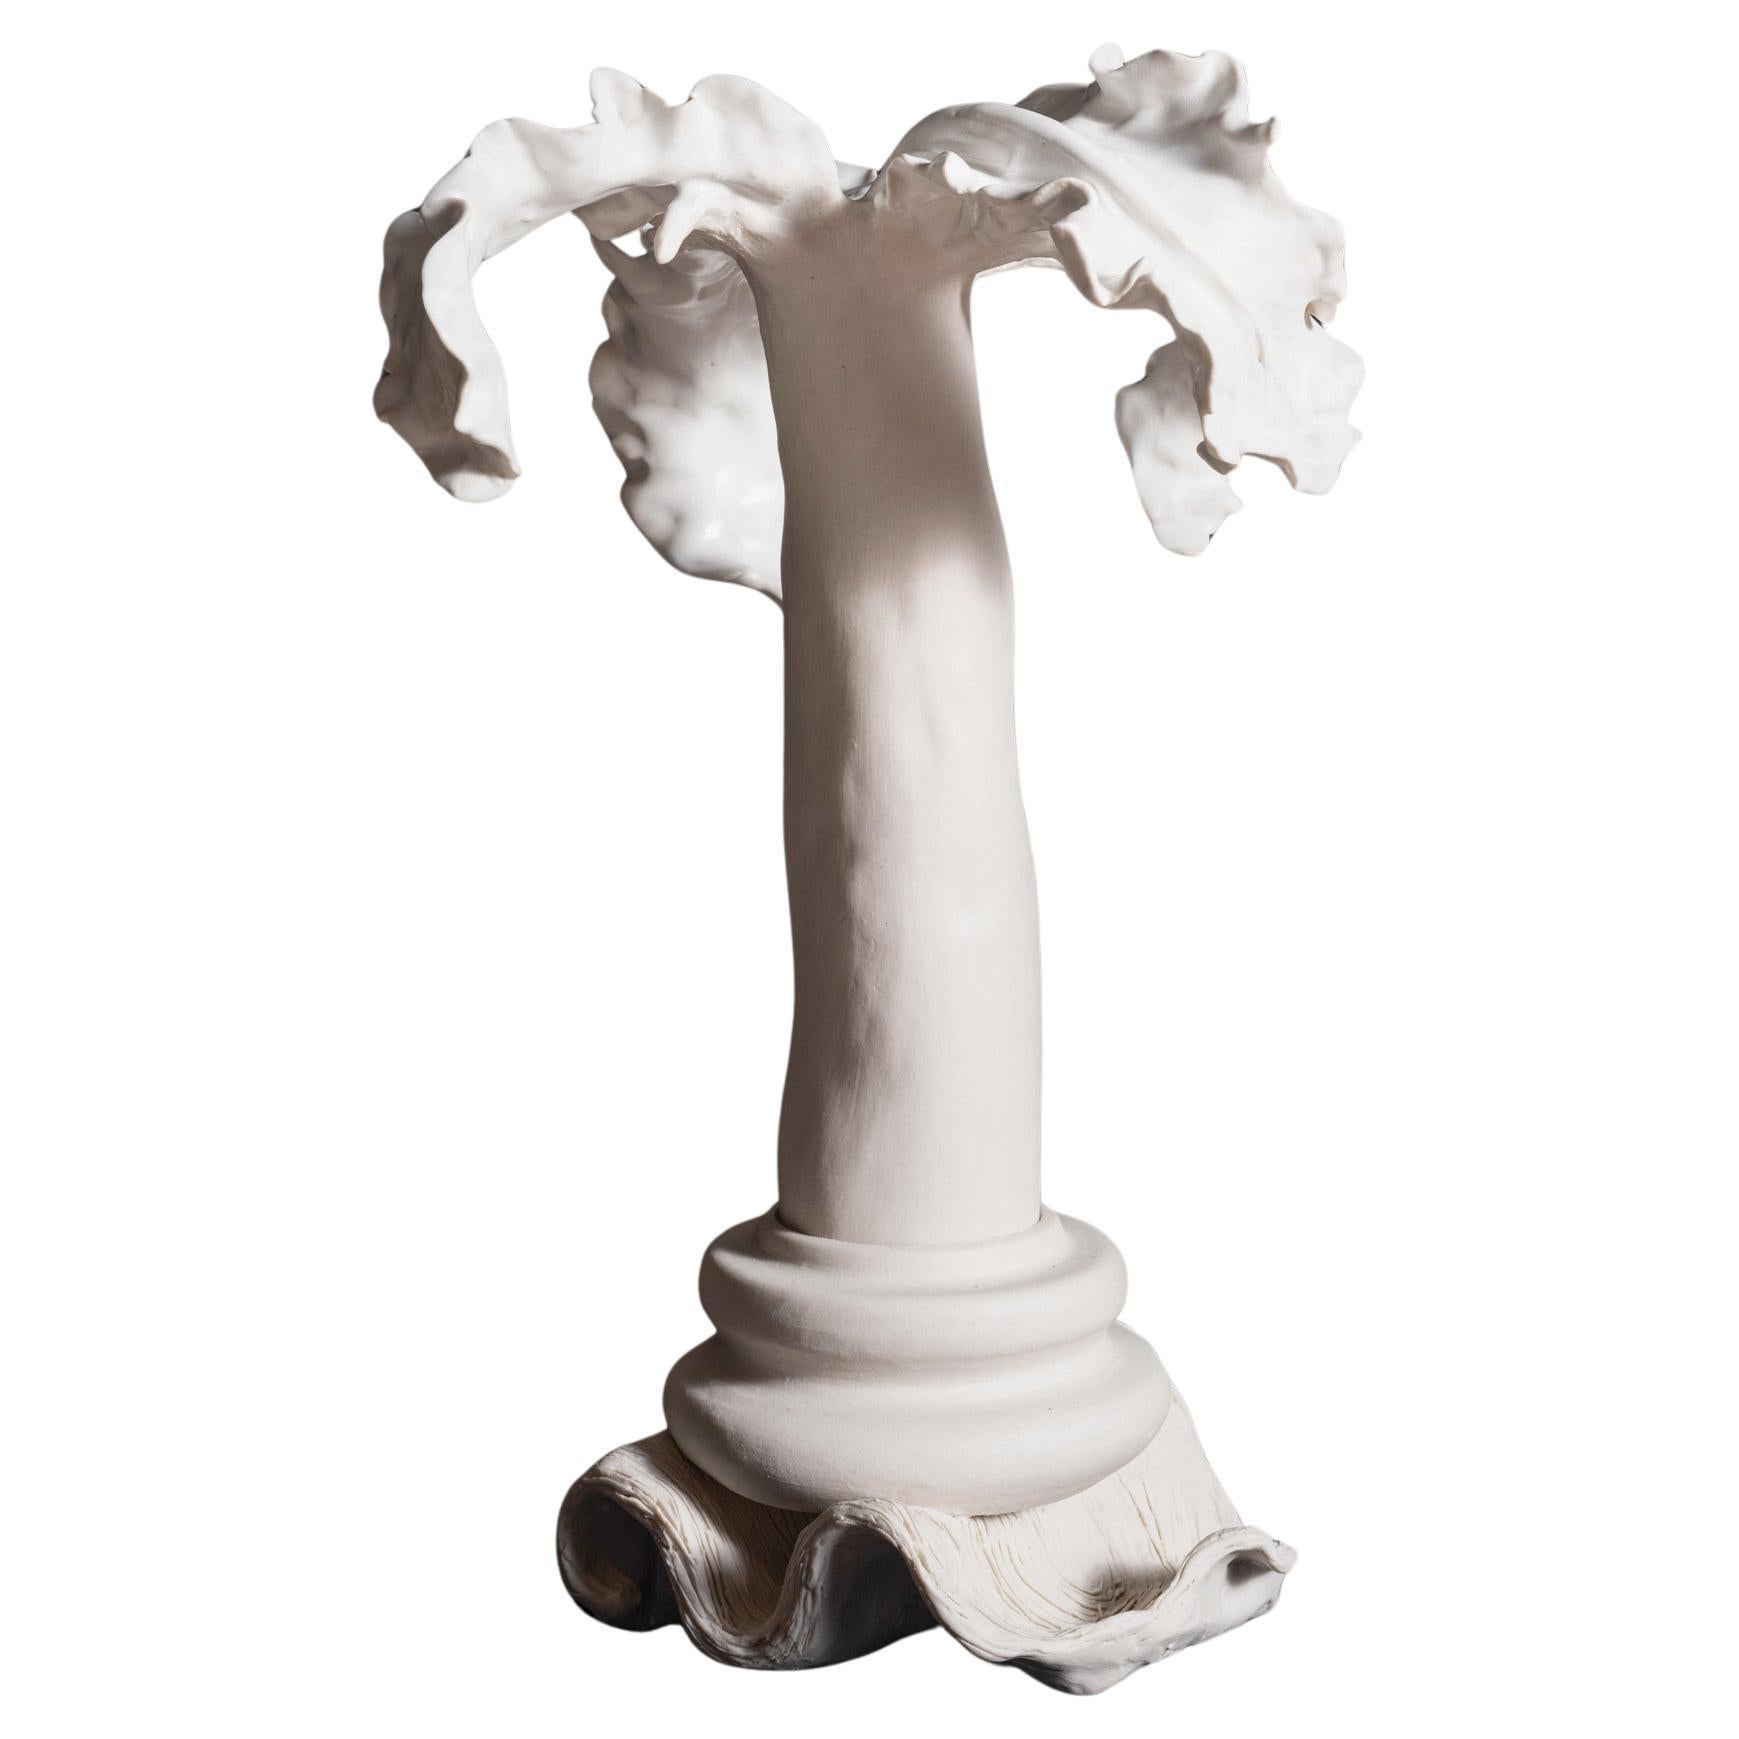 One-of-a-kind Slender and Sculptural Decorative Vessel in White Porcelain